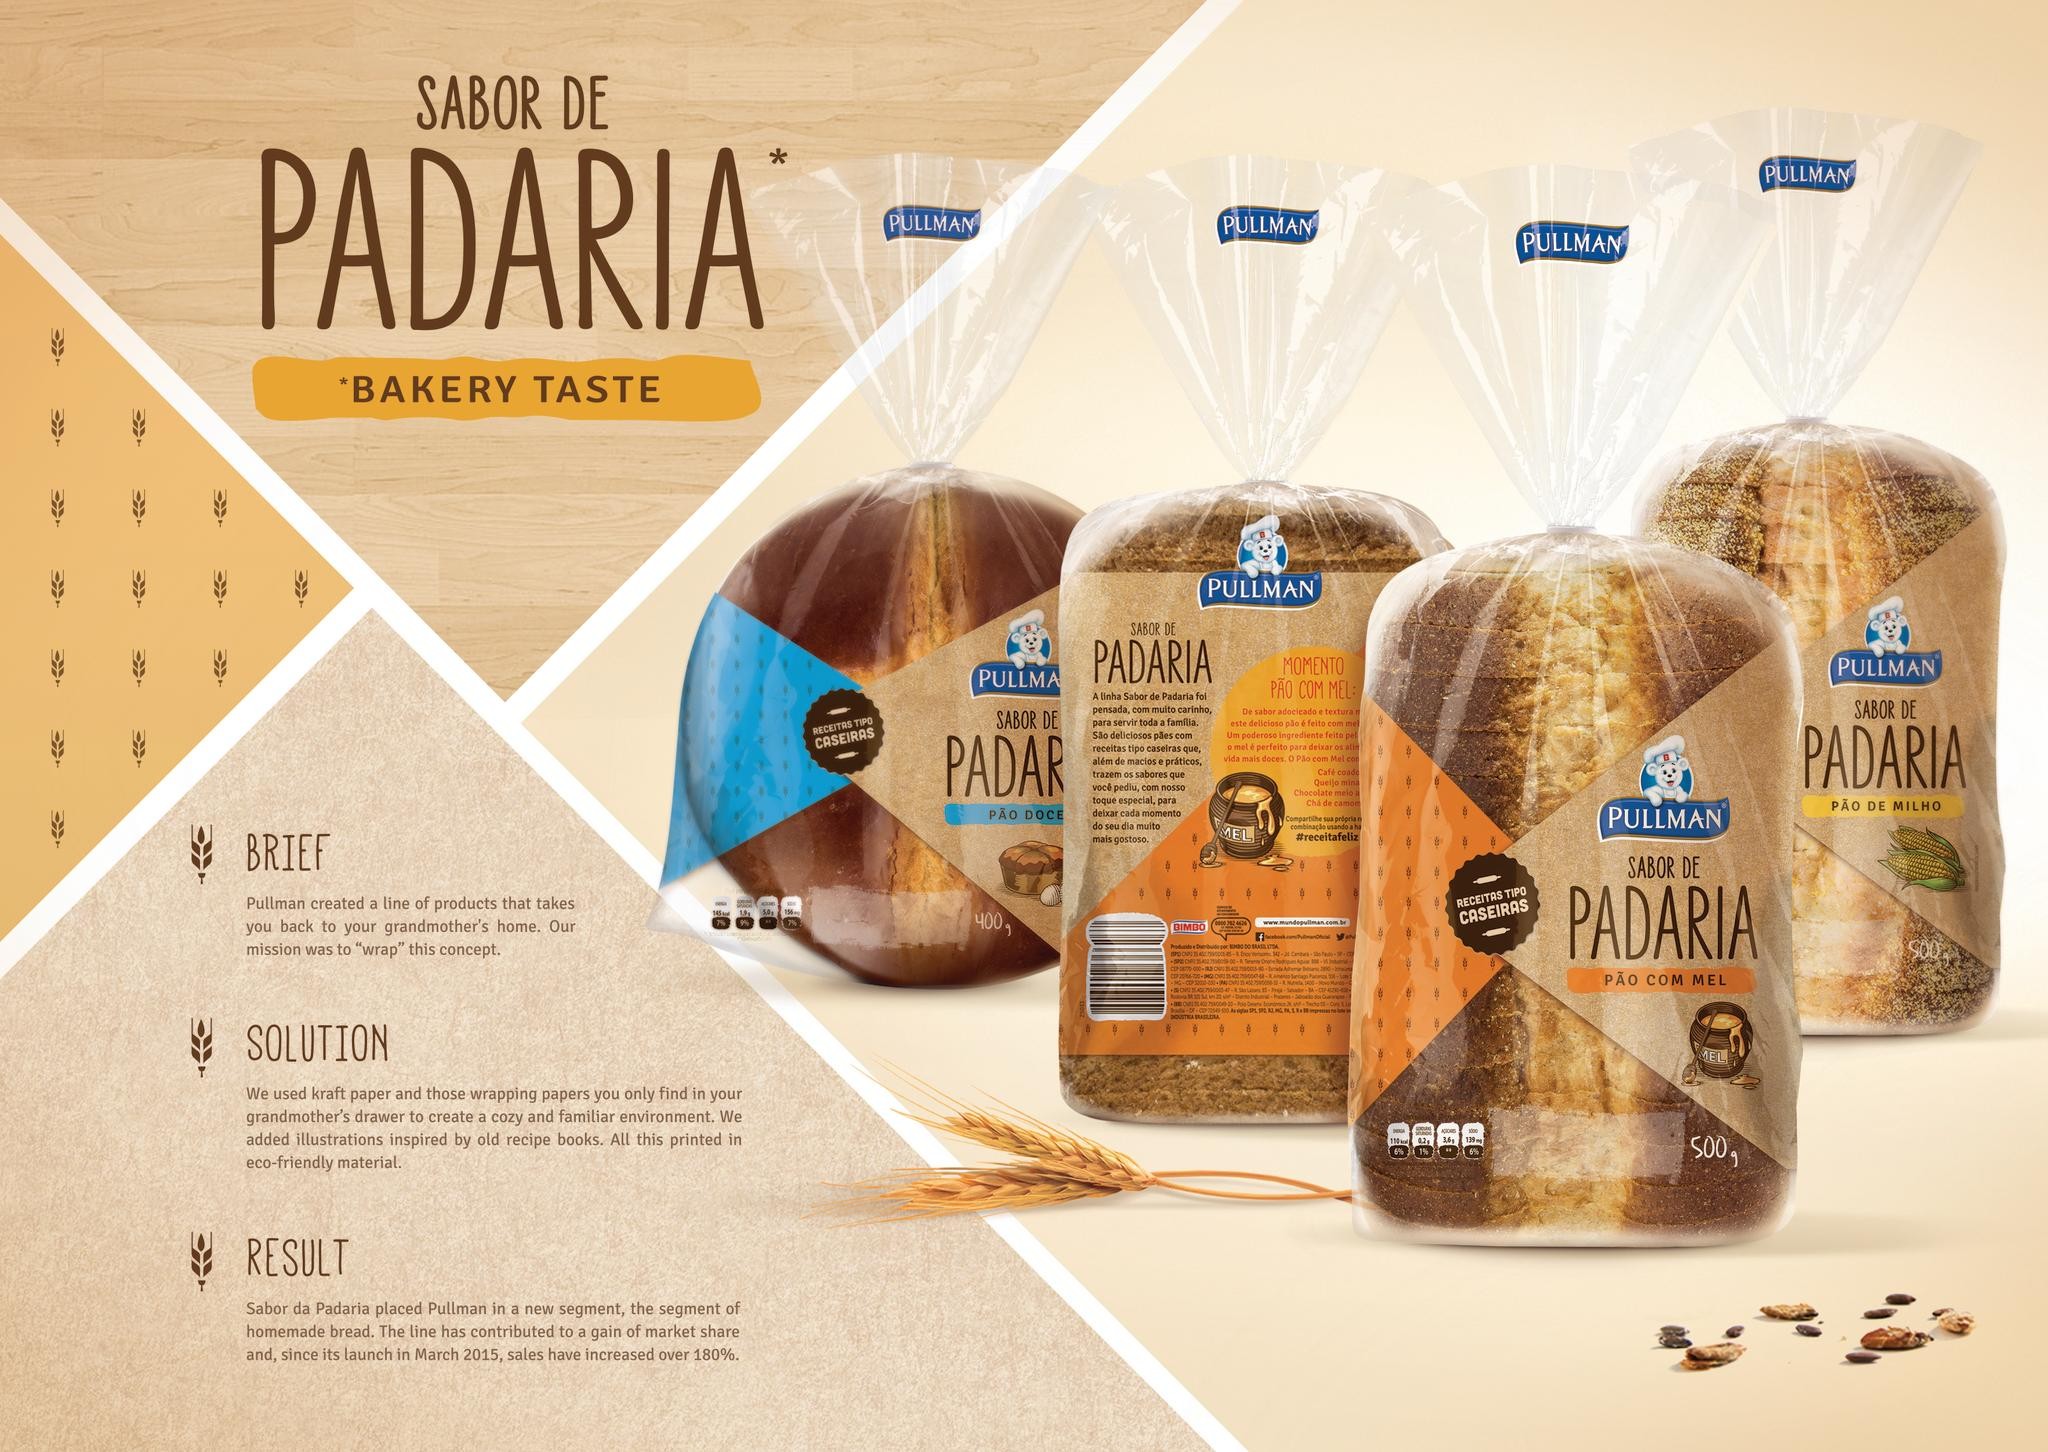 Sabor de Padaria | Taste of Bakery